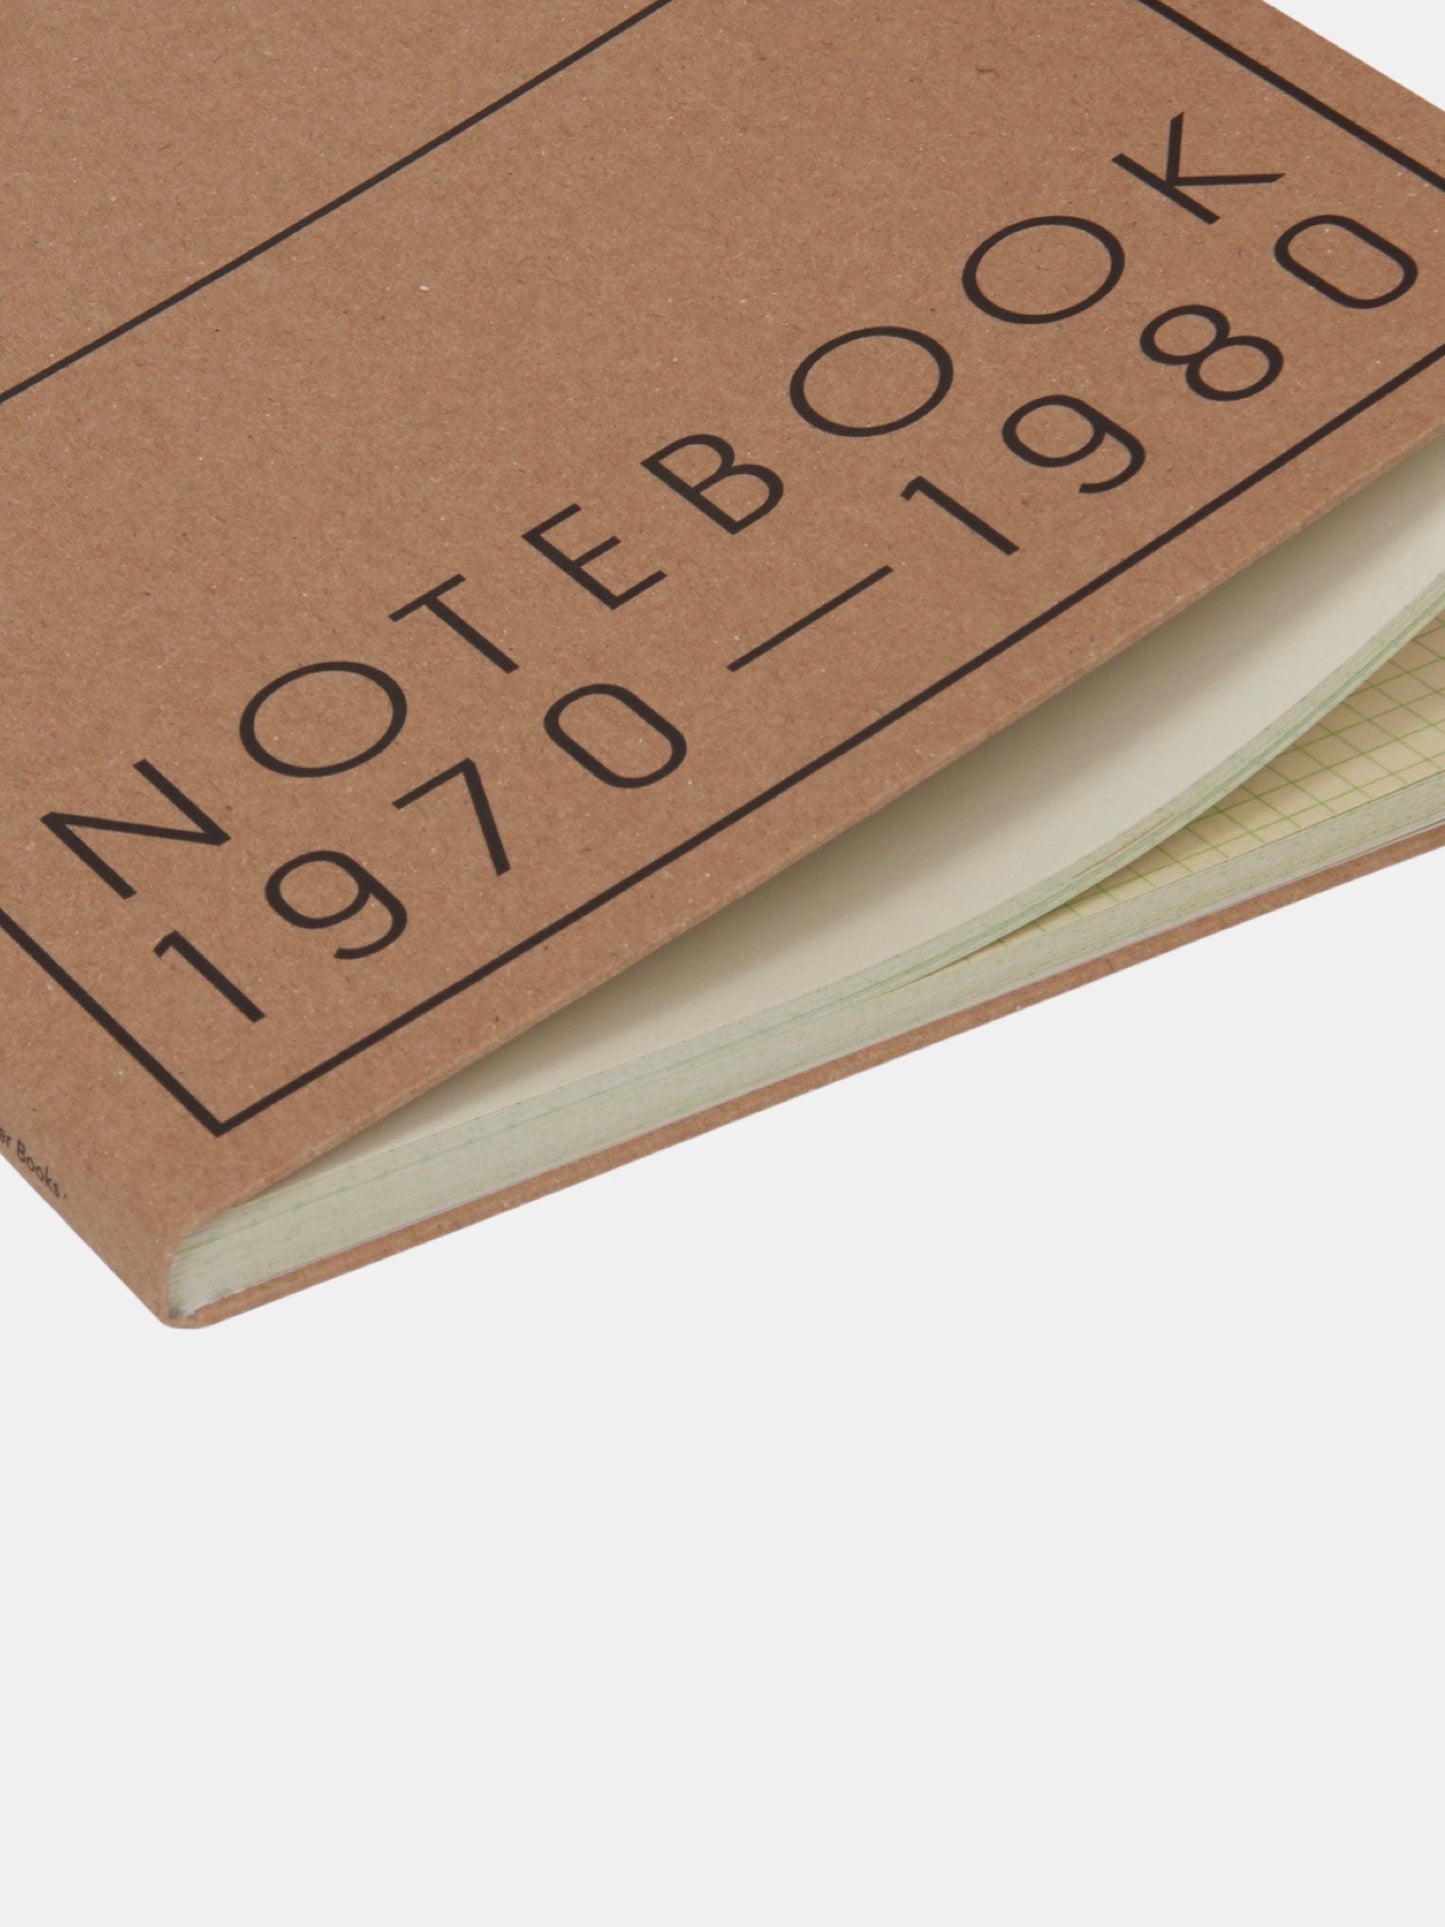 Anni Albers: Notebook 1970 - 1980